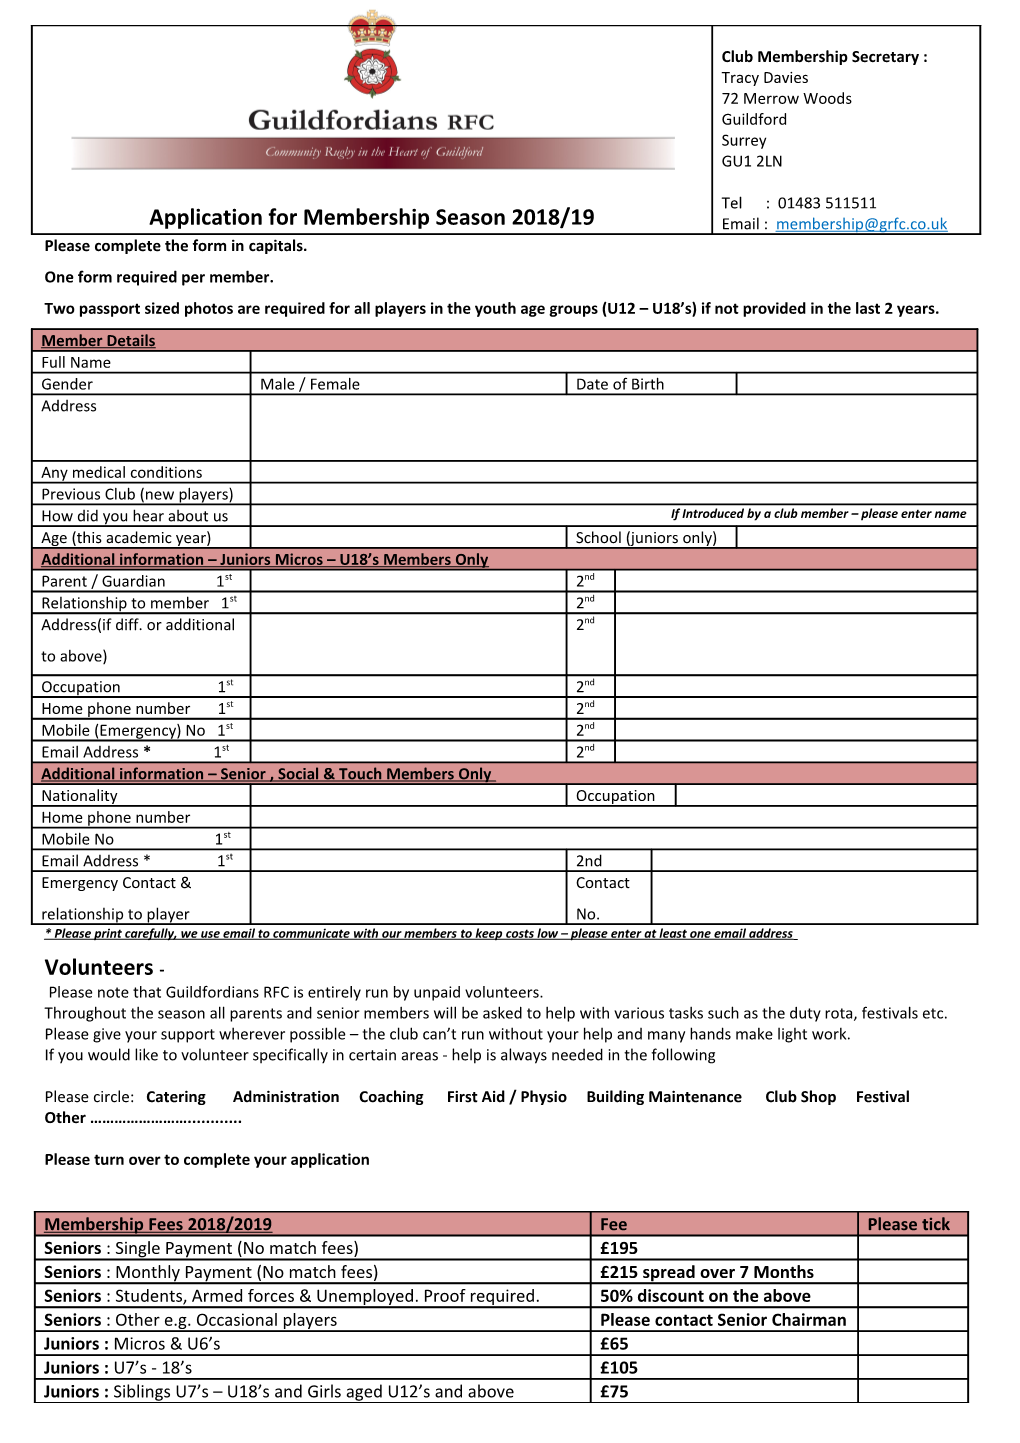 Guildfordians RFC Membership Application Form